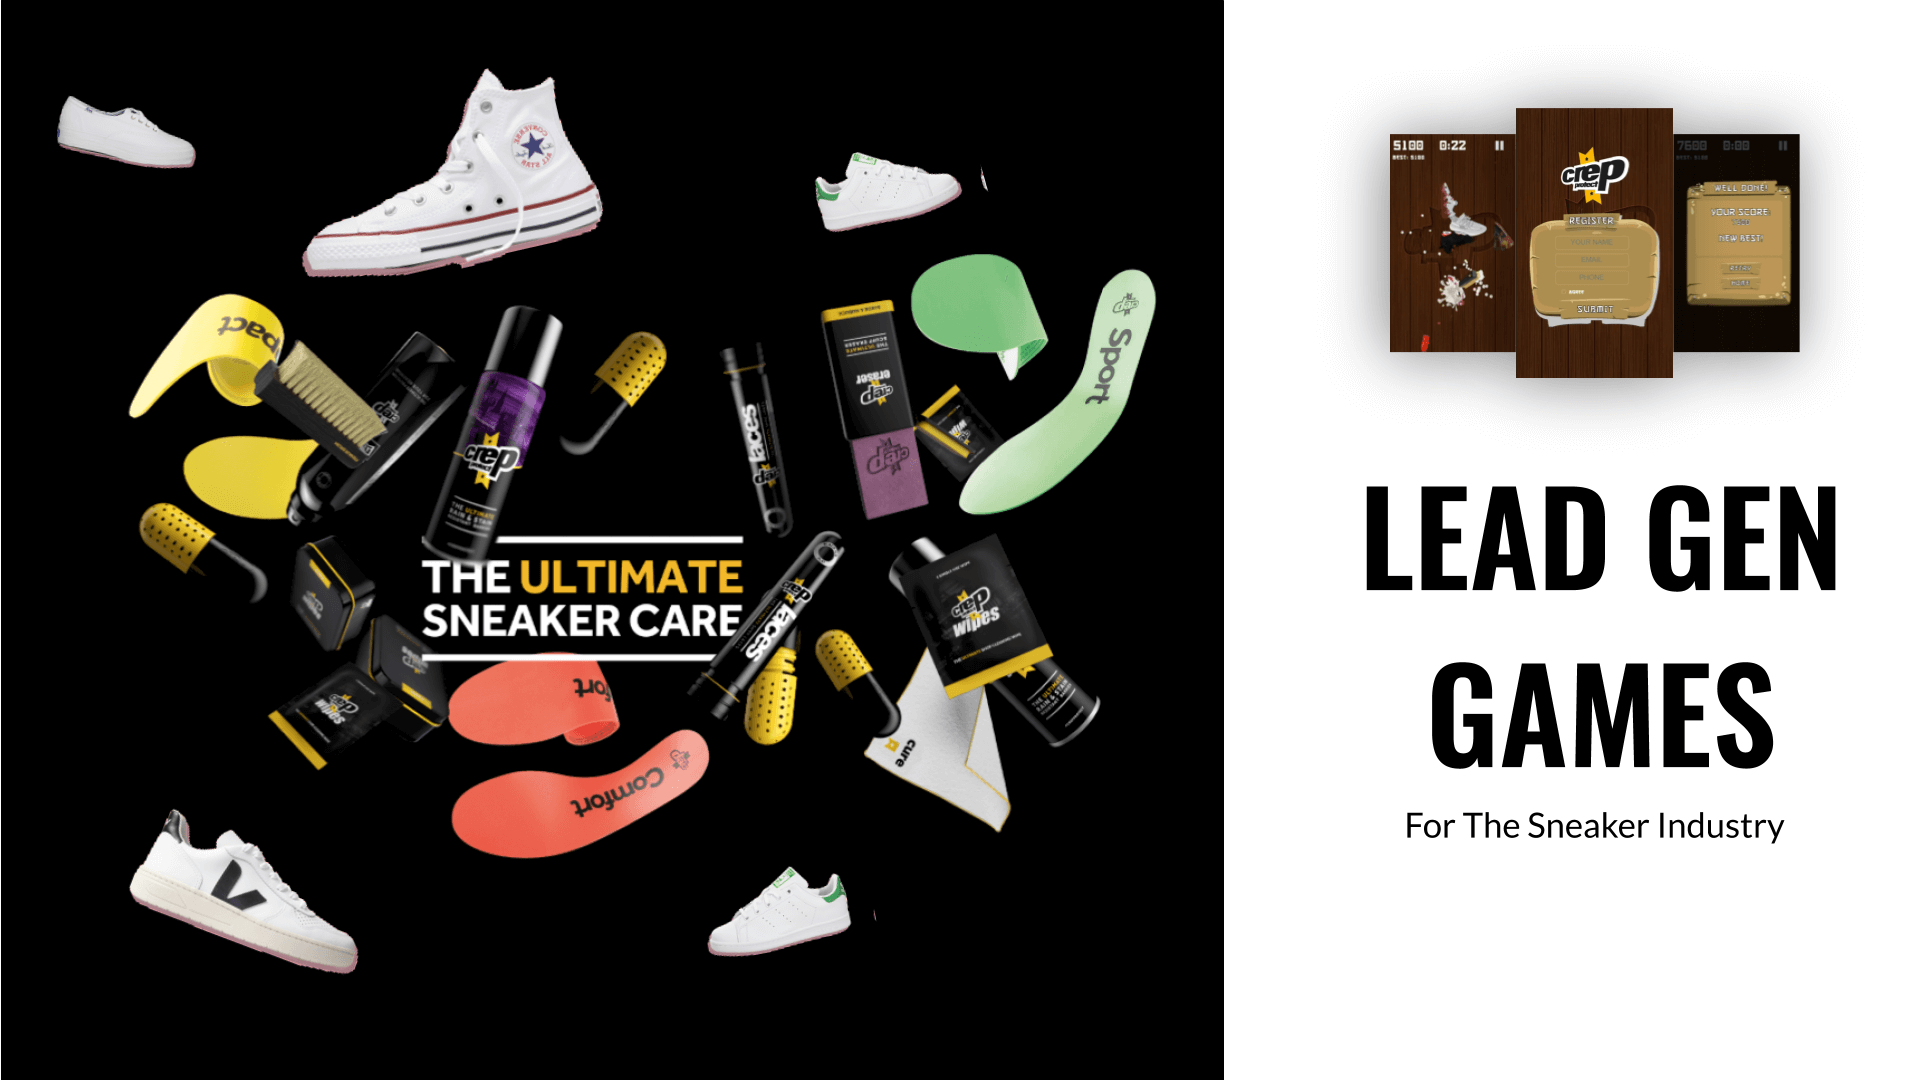 Lead Gen Games For The Sneaker Industry